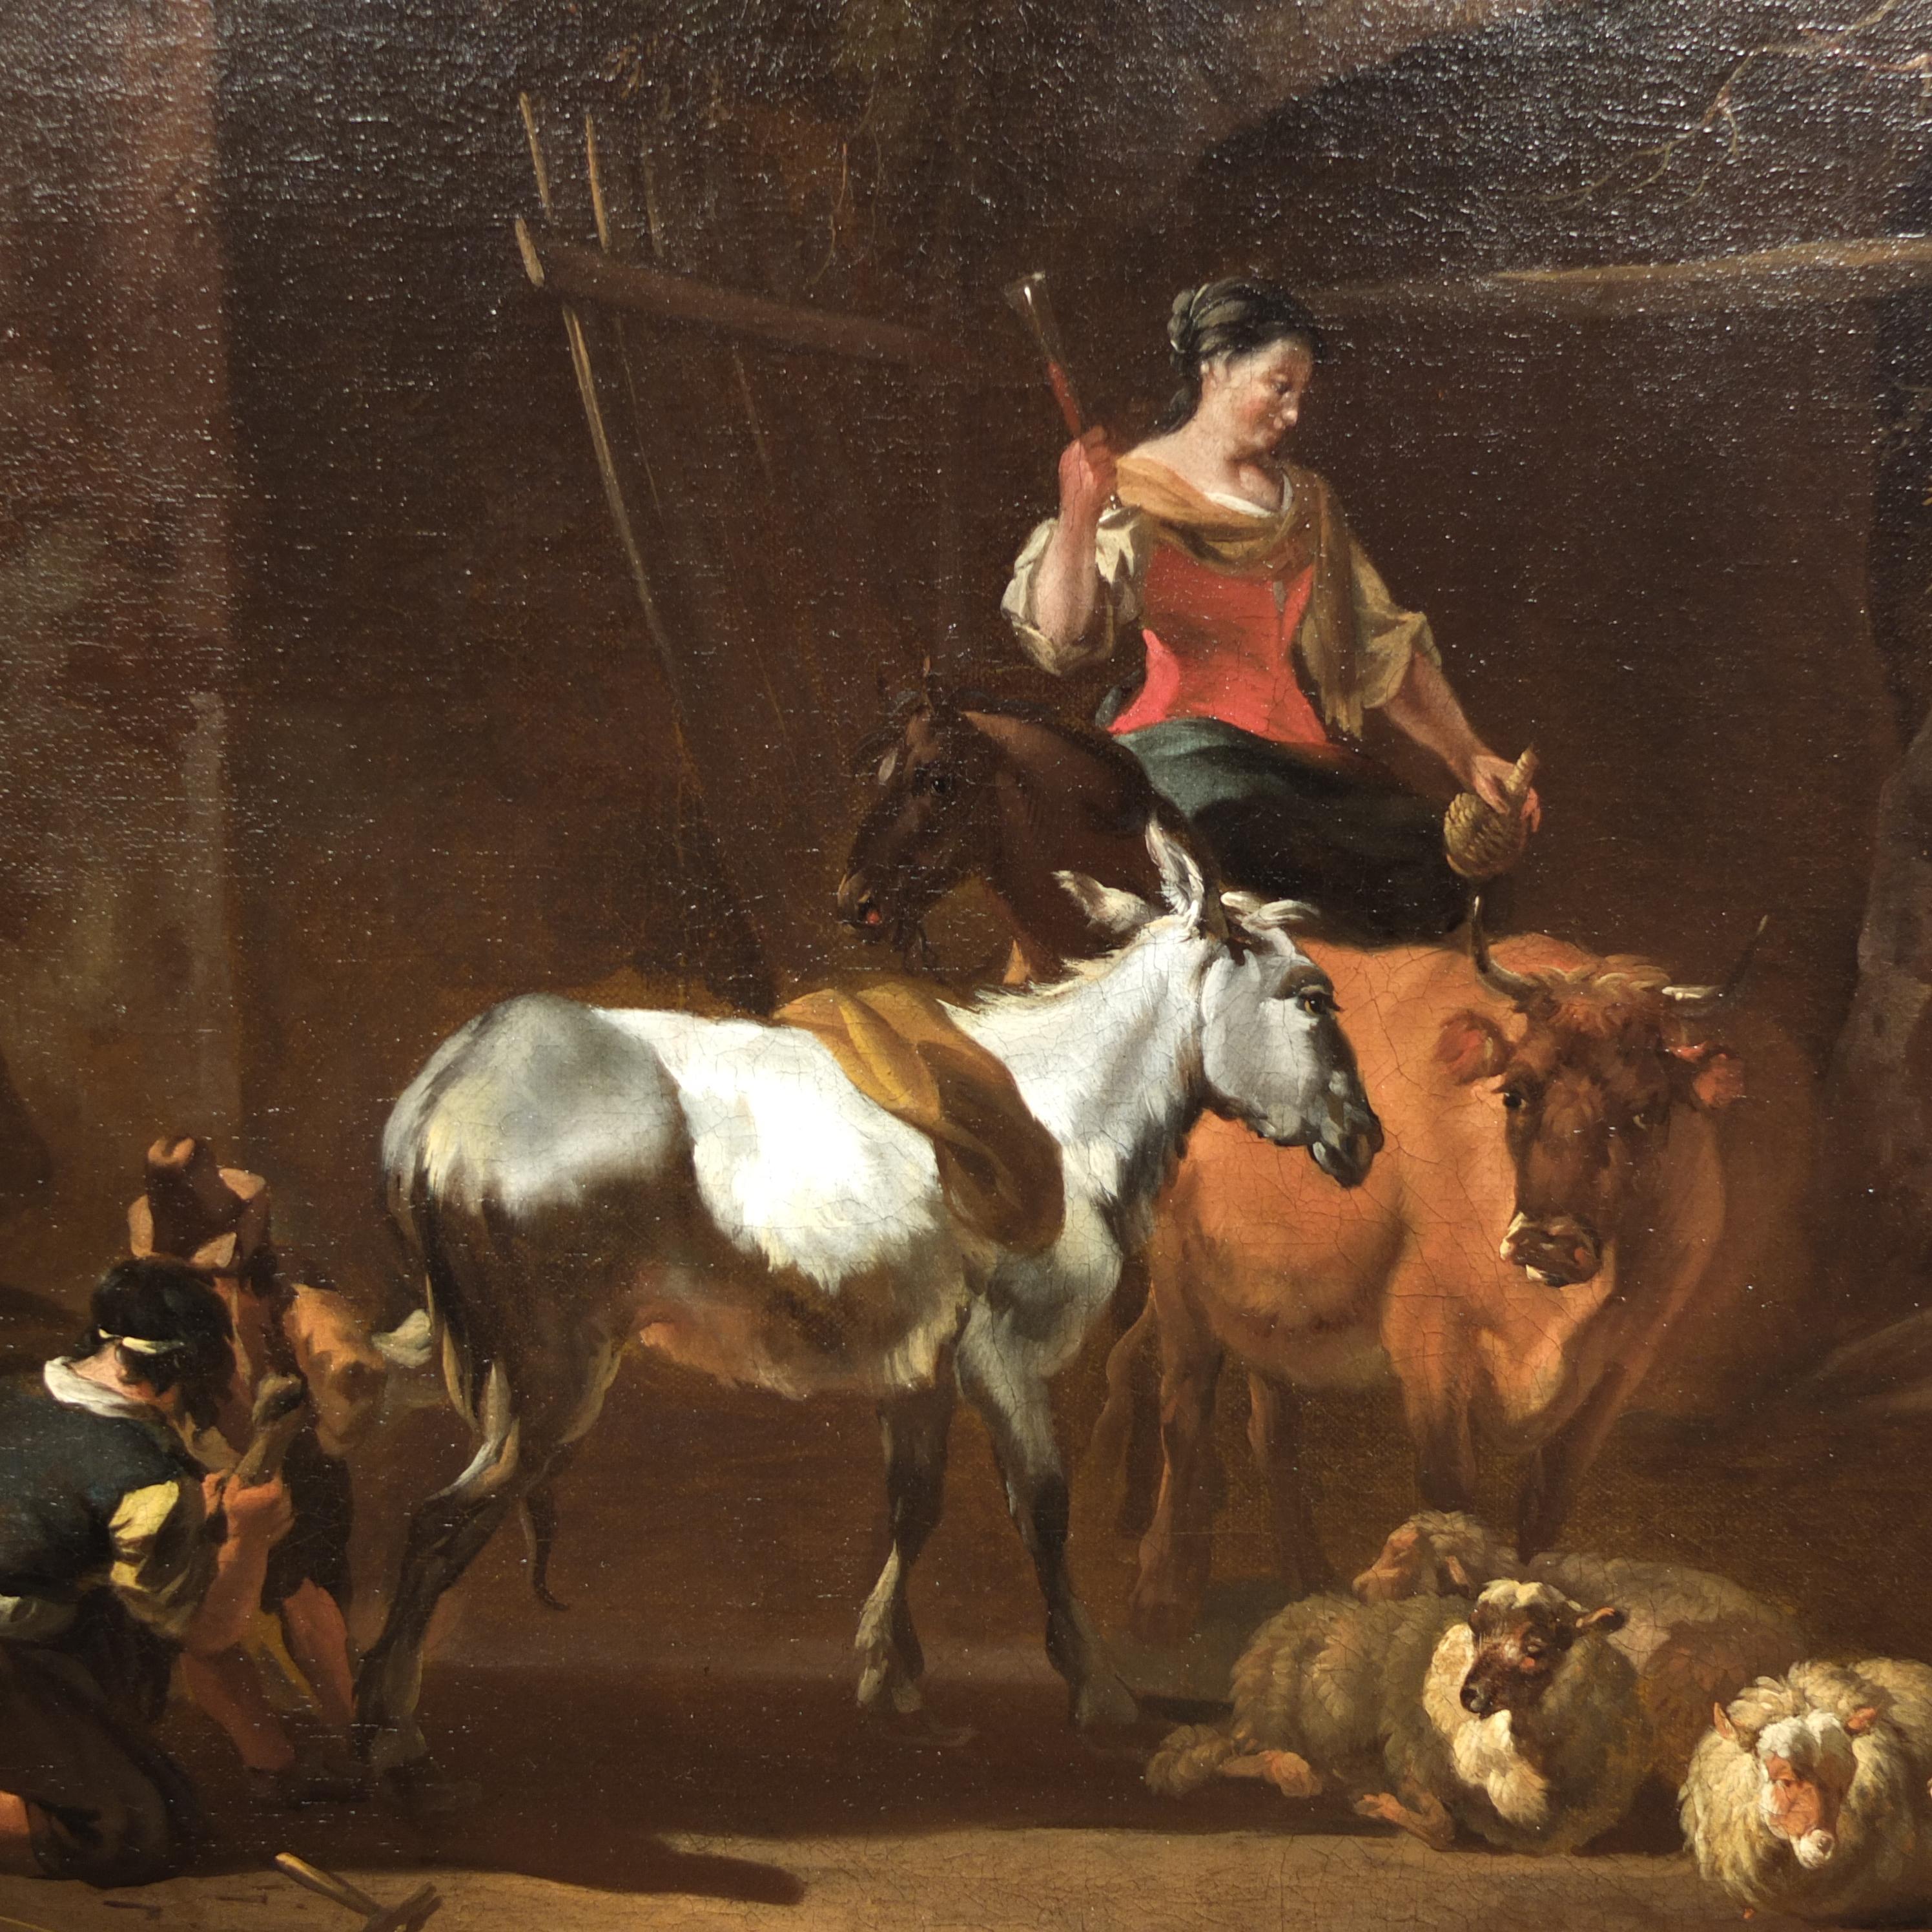 Van der Bent, Southern Landscape with woman animals, Dutch Old Master, Berchem - Painting by Jan van der Bent